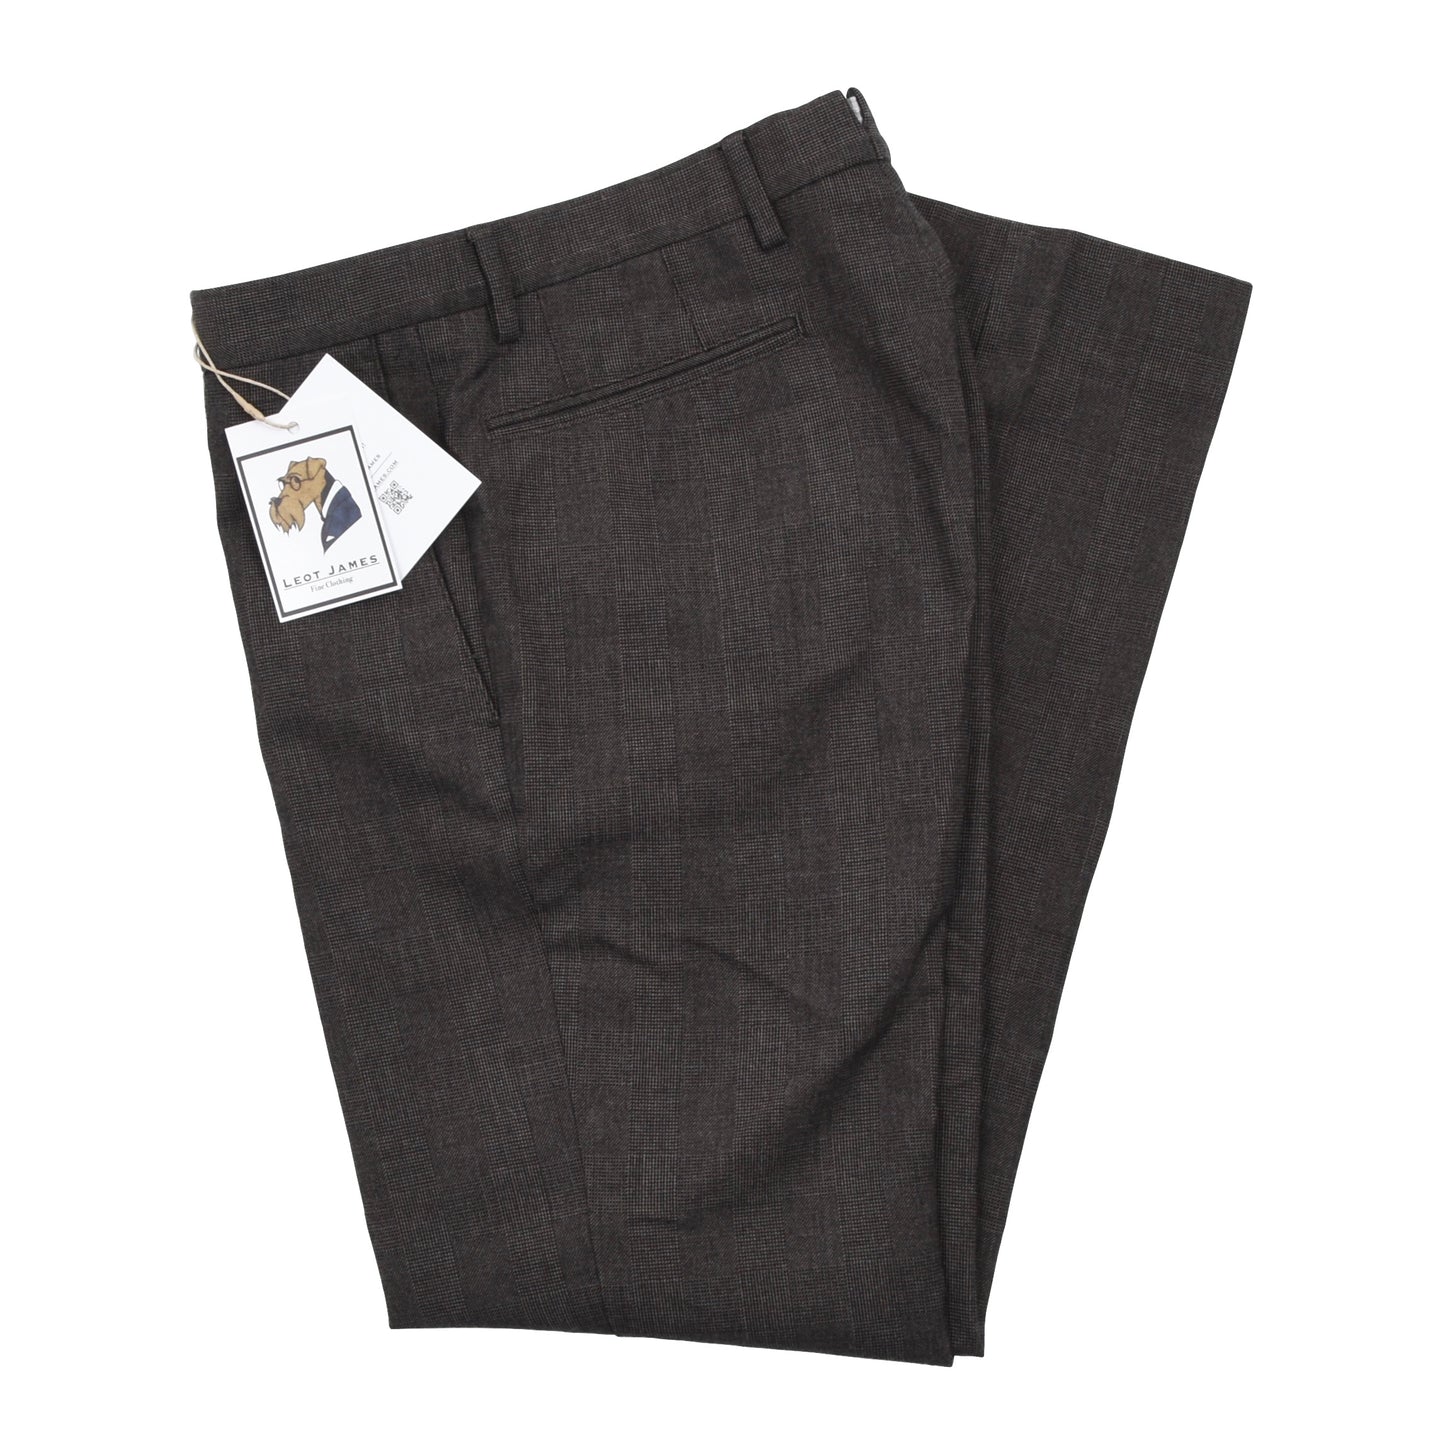 Incotex Wool/COtton Pants Size 46 - Prince of Wales